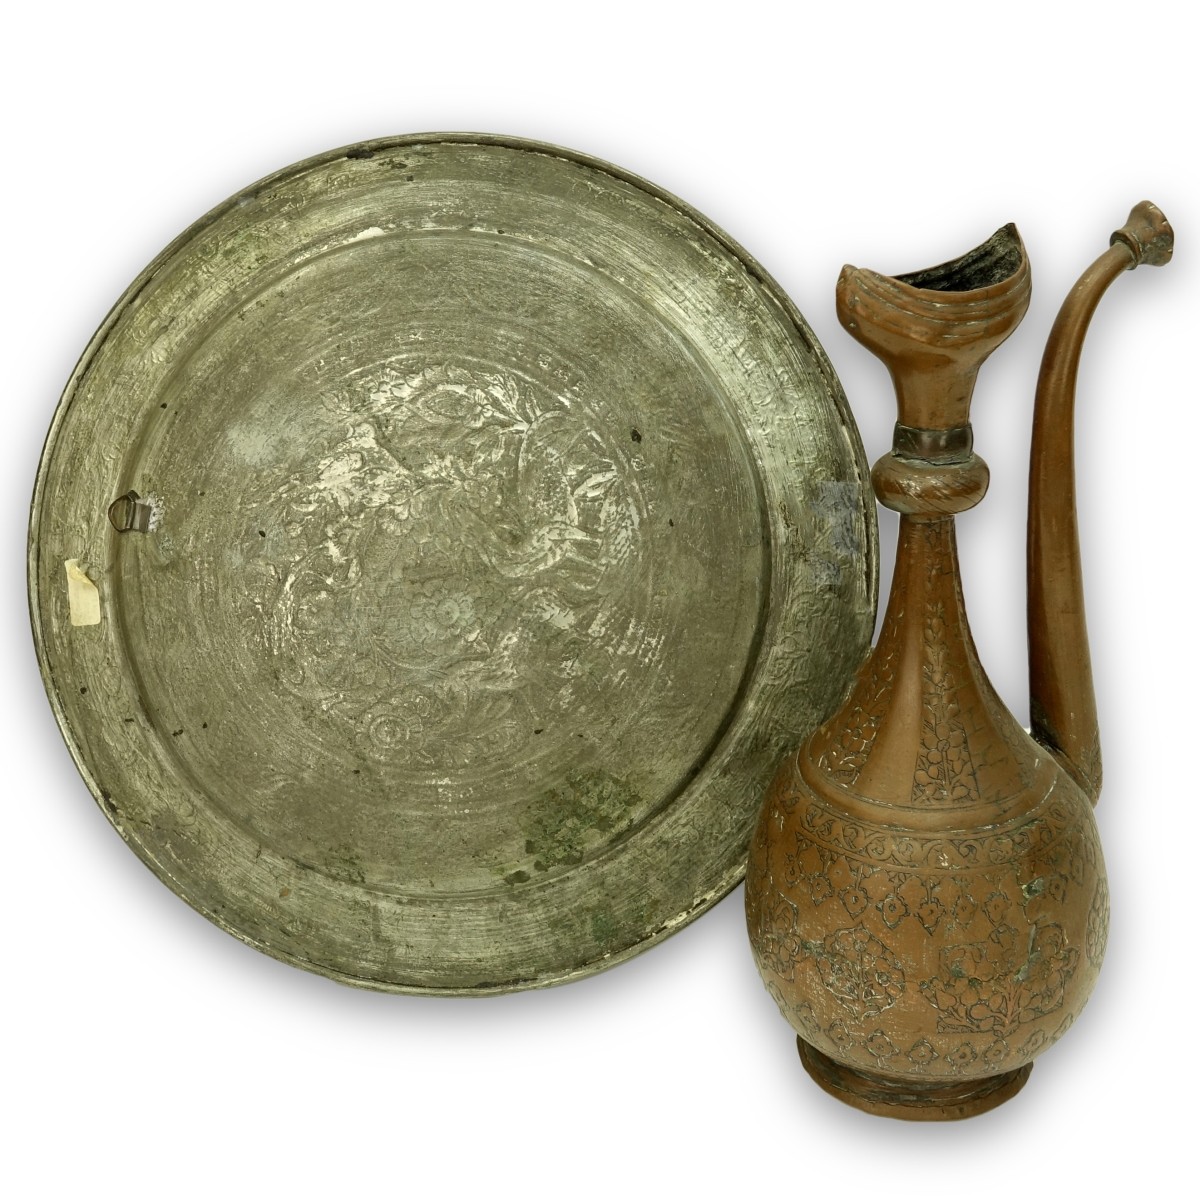 Islamic Tableware